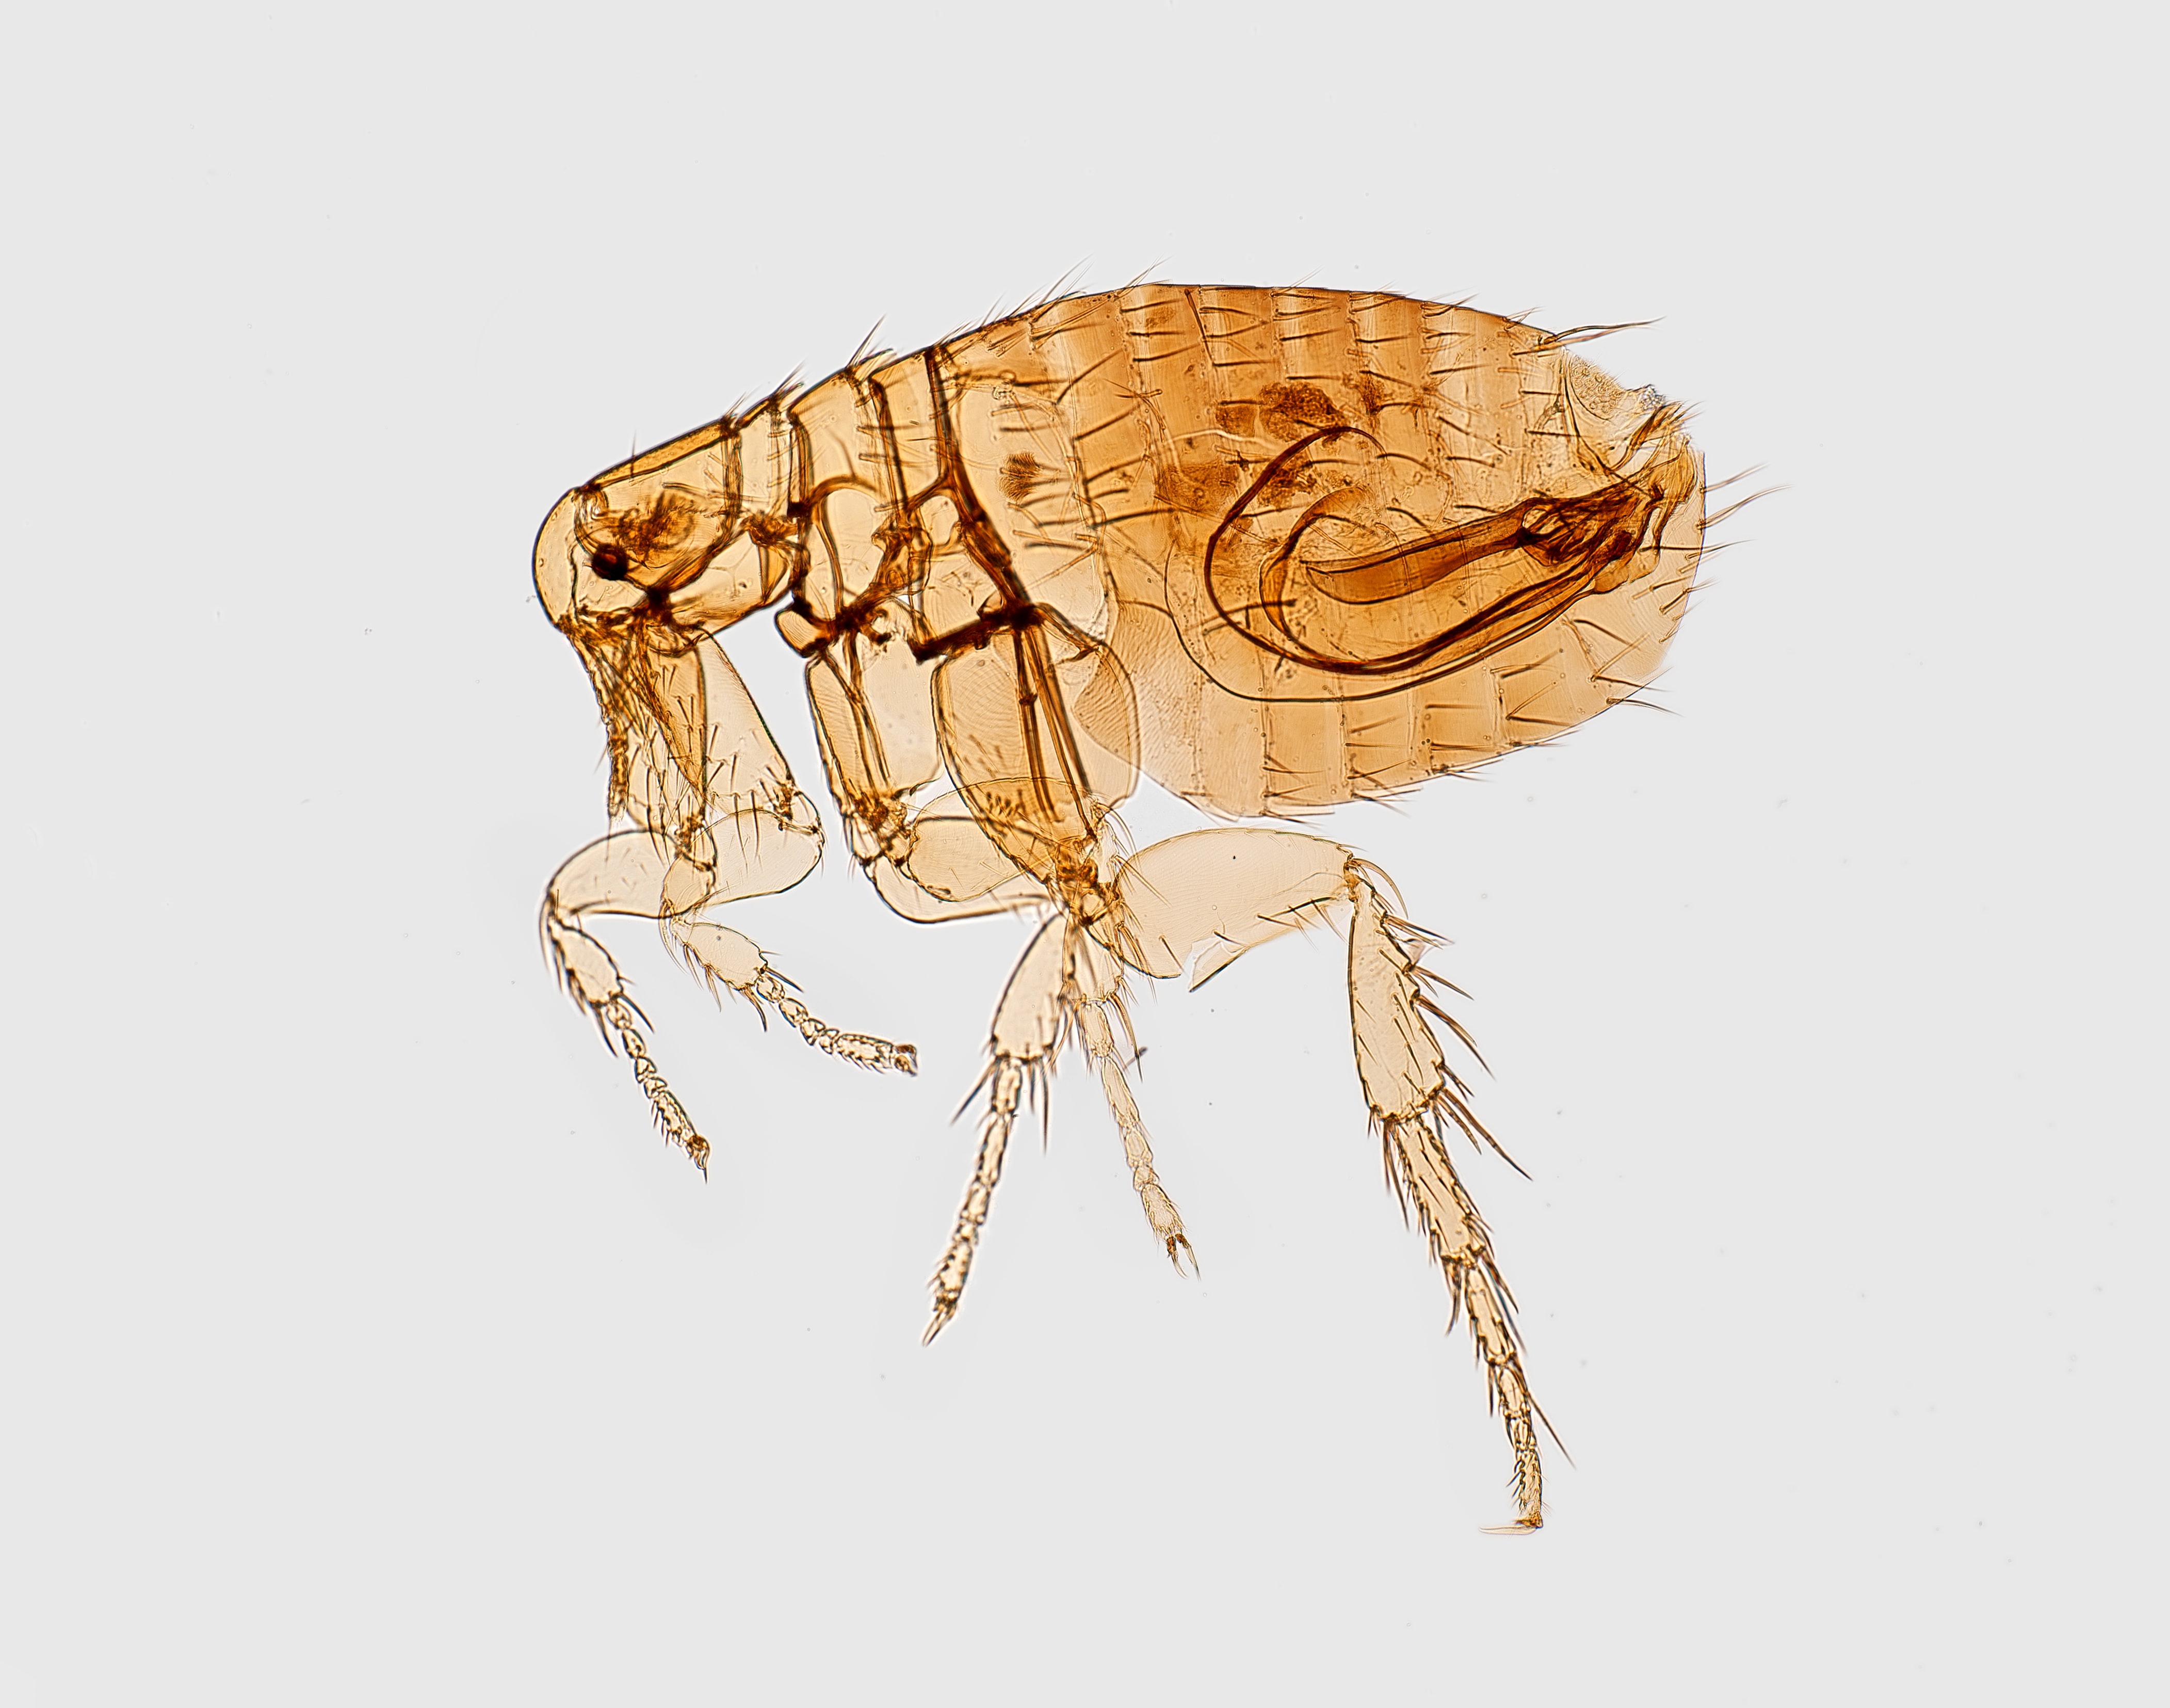 Close up image of a flea